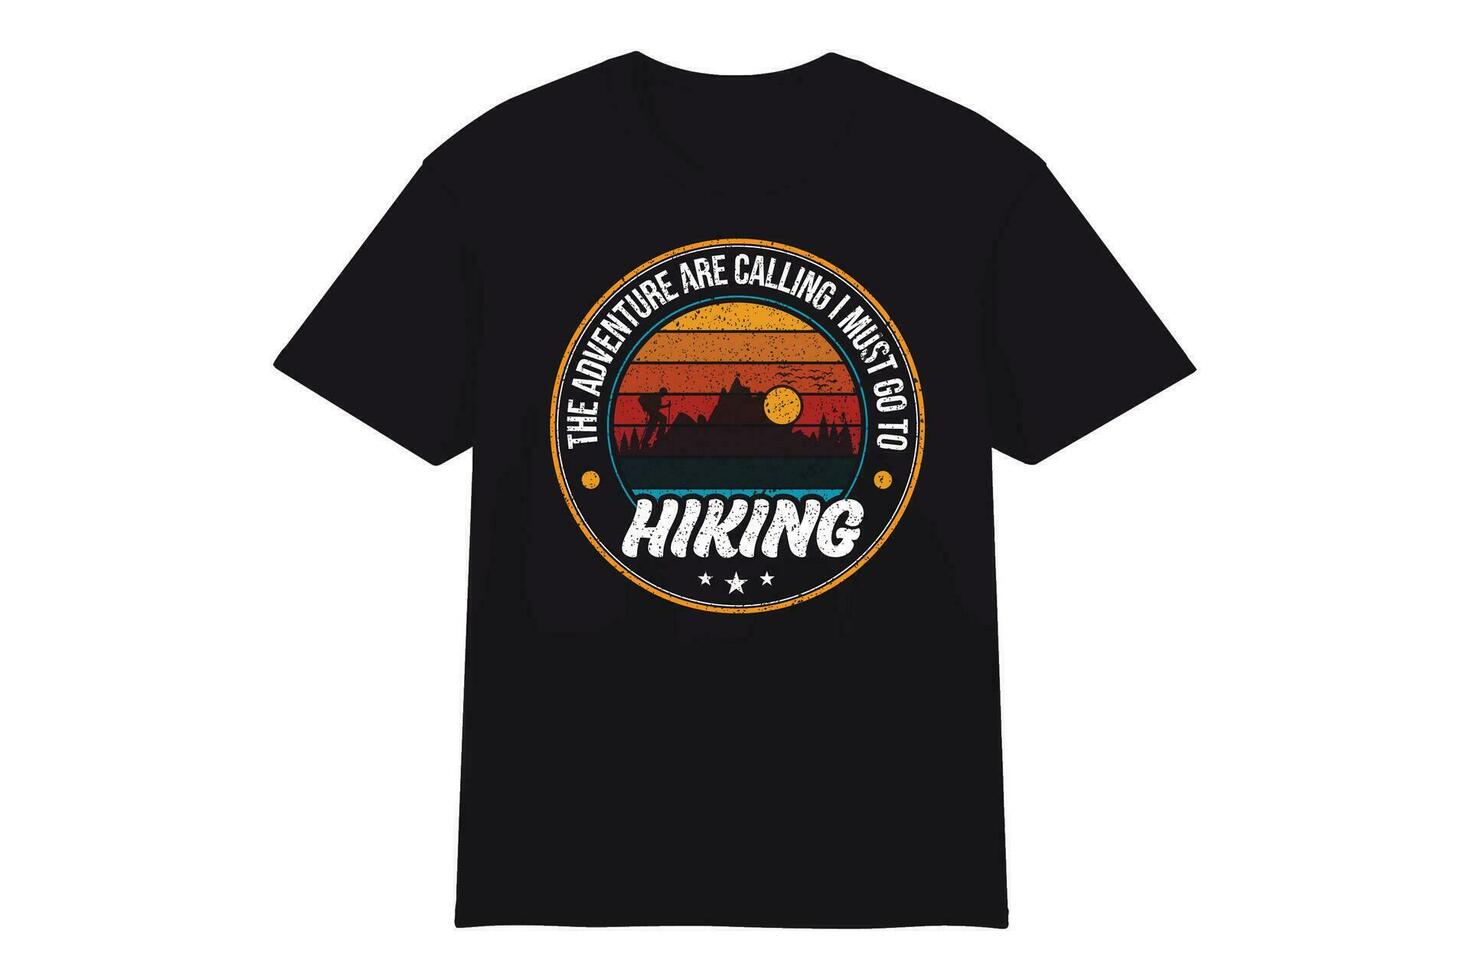 Hiking T-shirt Design Vector